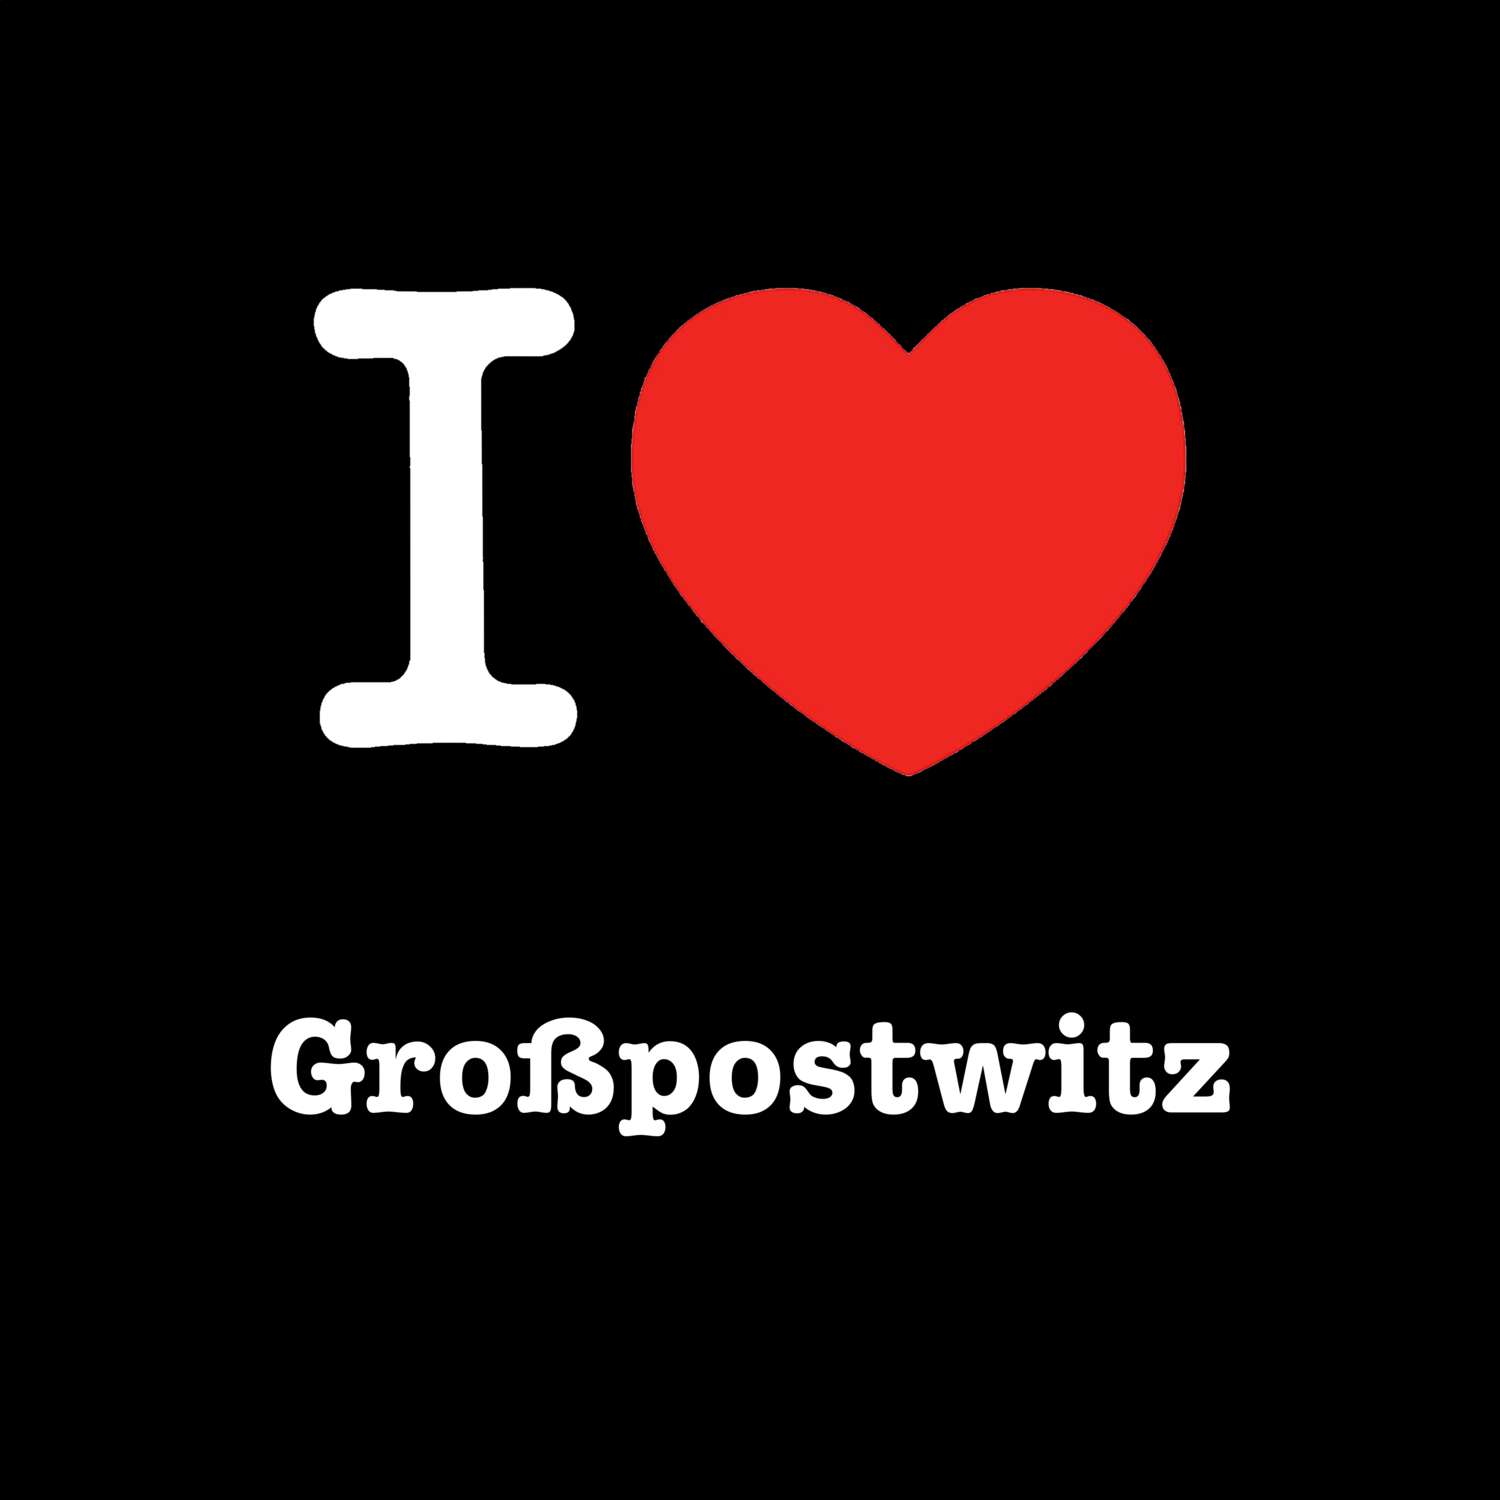 Großpostwitz T-Shirt »I love«